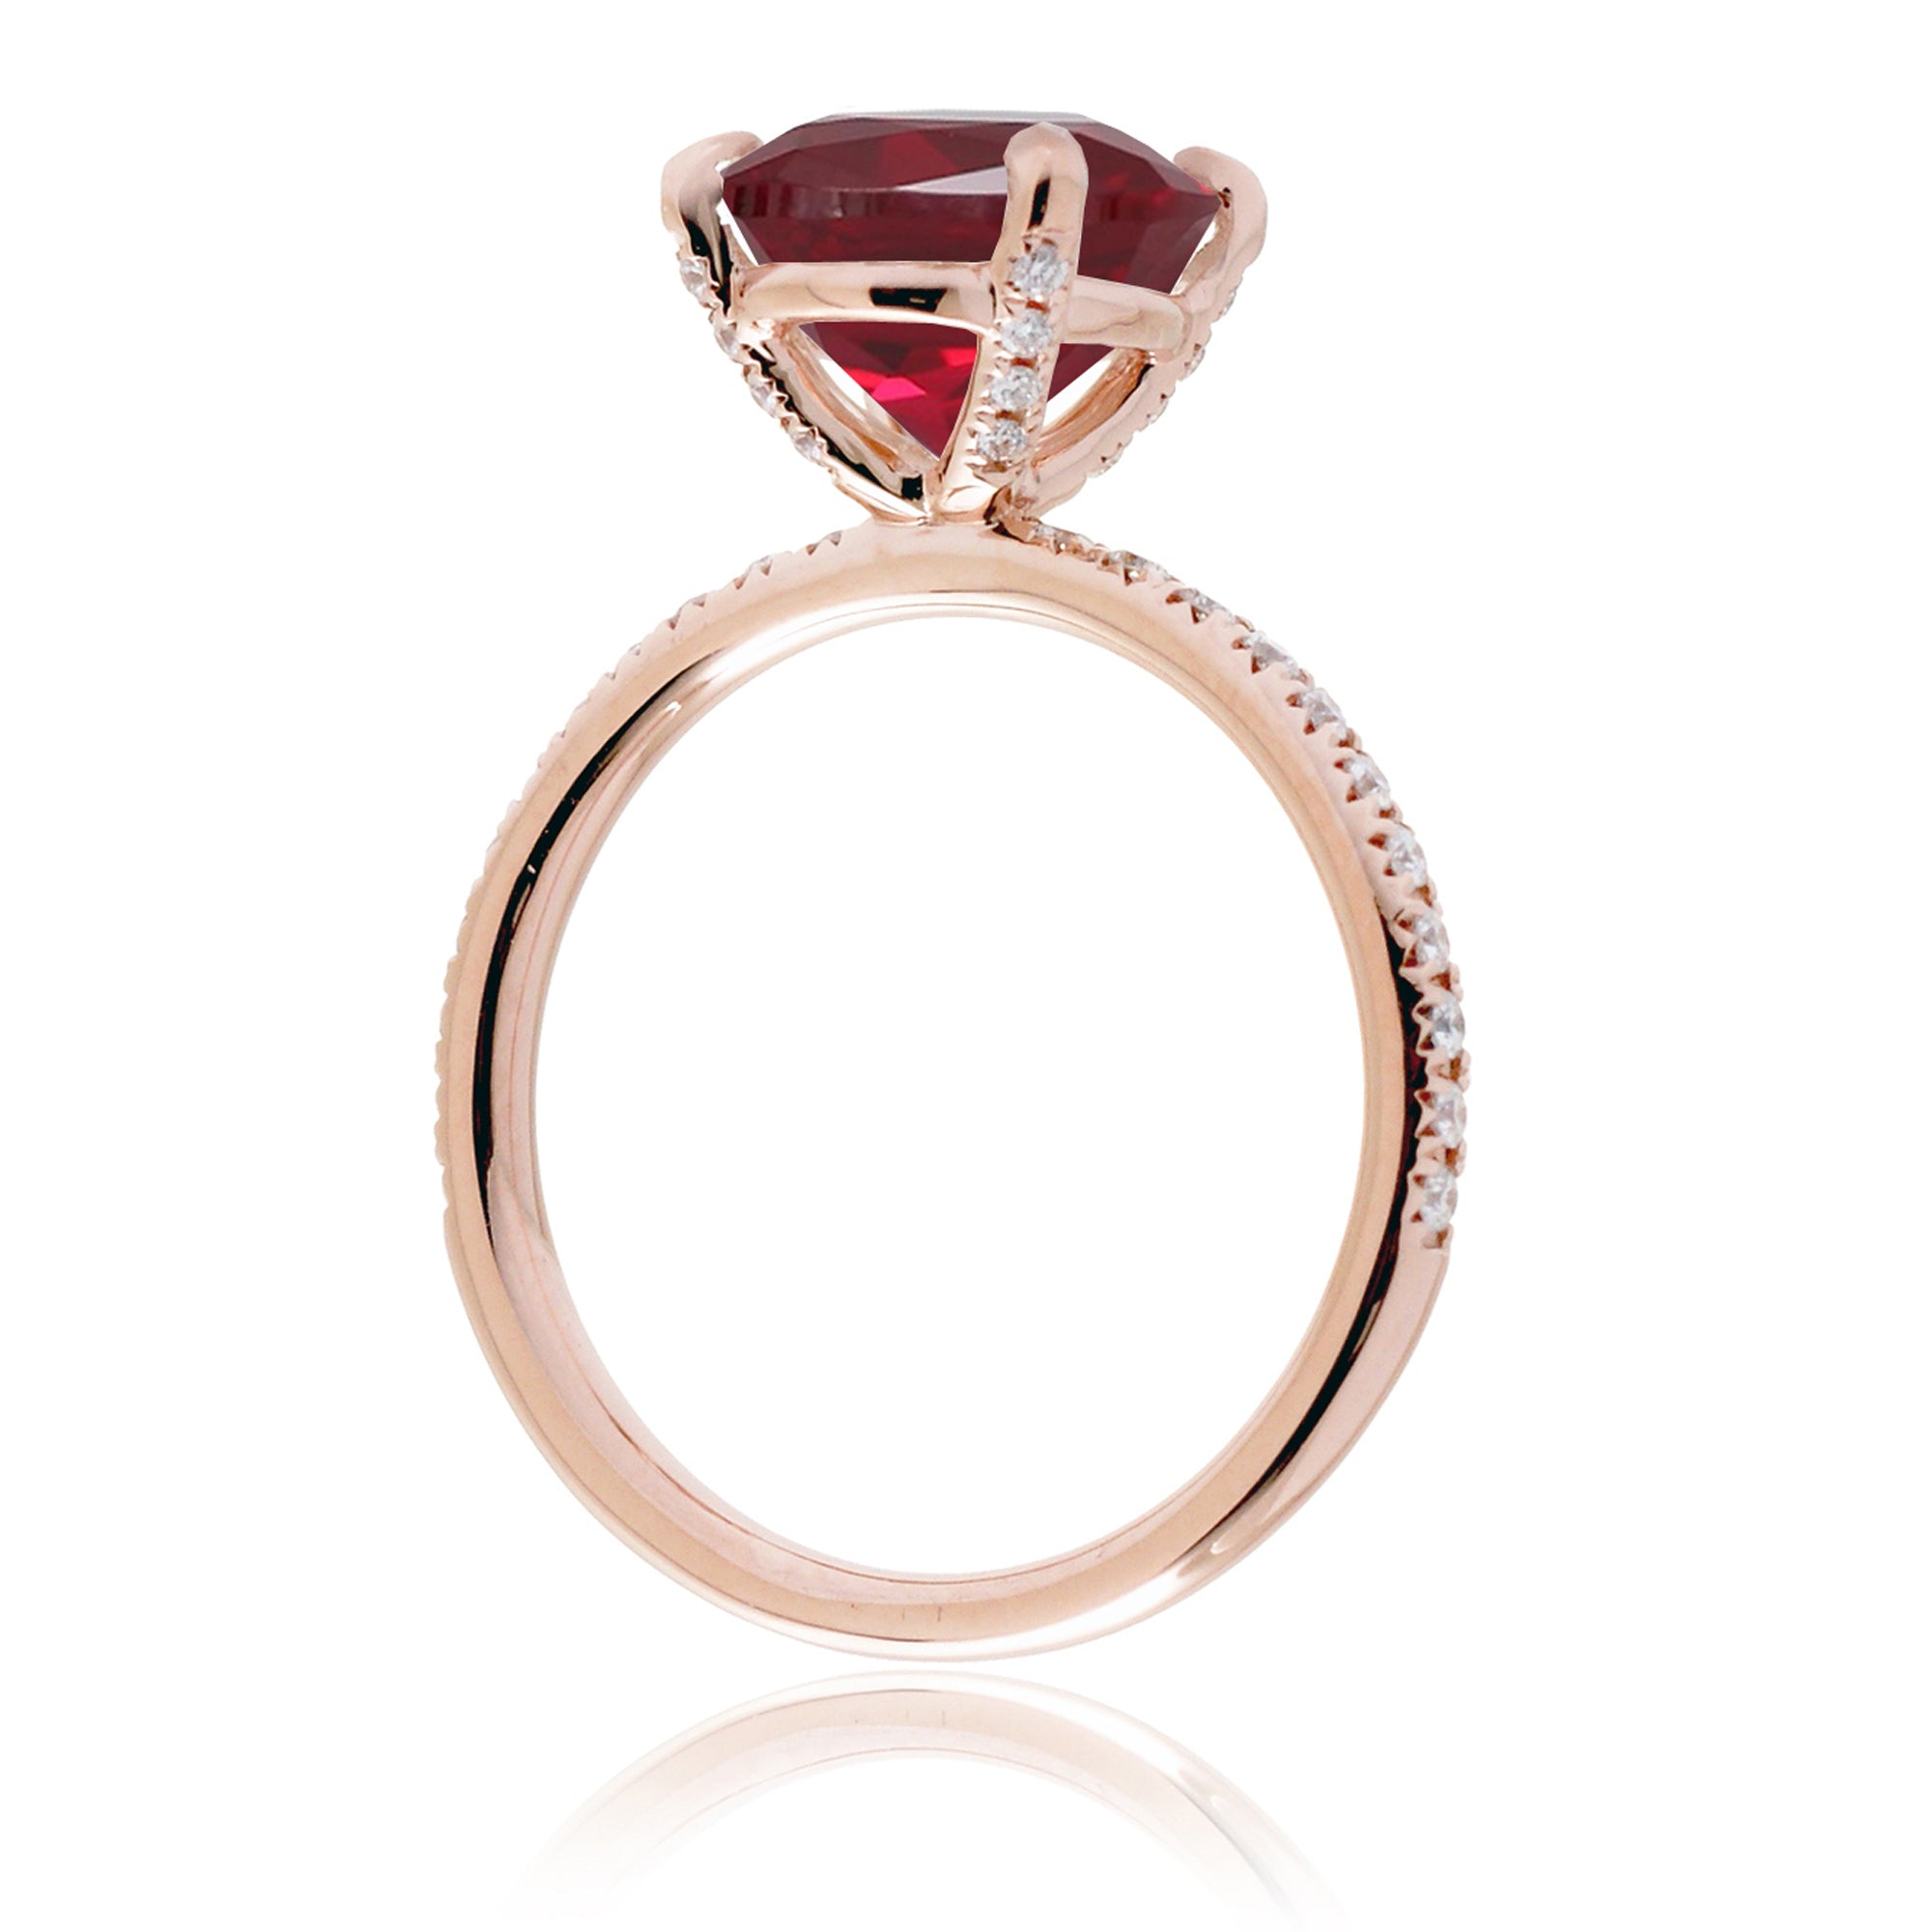 The Ava Princess Cut Ruby Ring (Lab Grown)